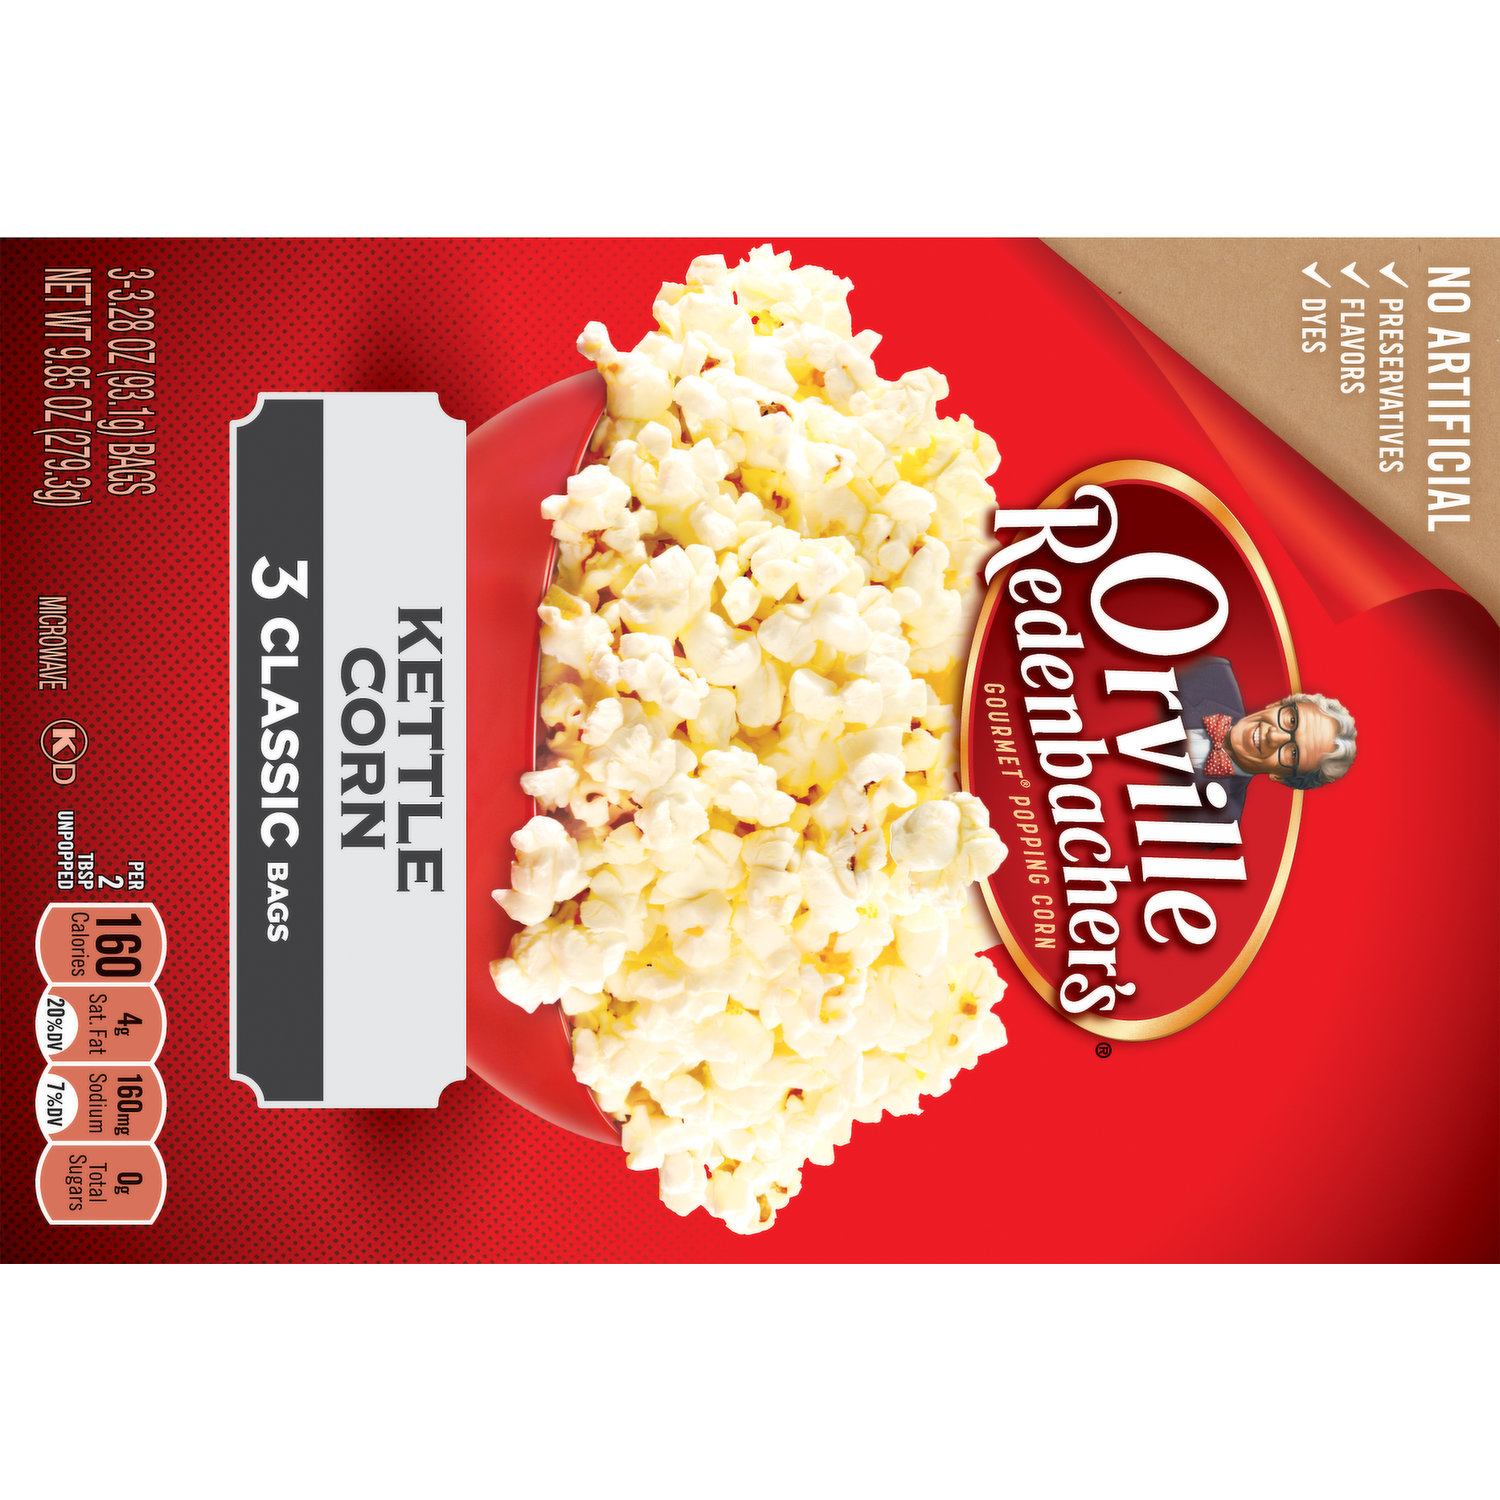 Orville Redenbacher's Kettle Corn Microwave Popcorn, 3 Each